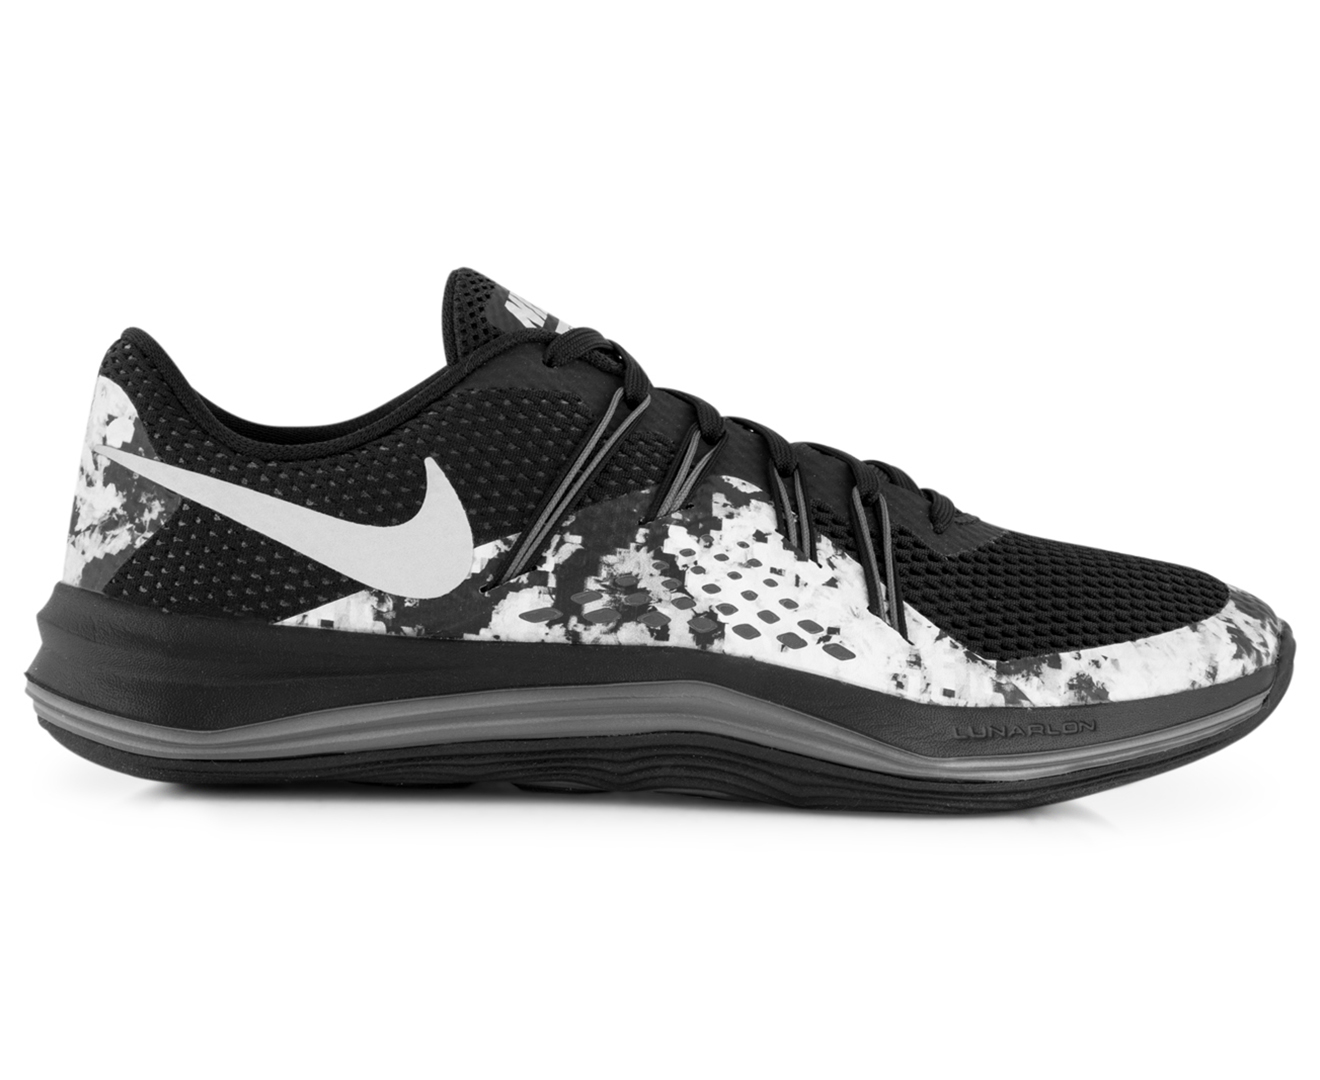 Nike Women's Lunar Exceed TR Print Shoe Black/Metallic Silver Catch.co.nz